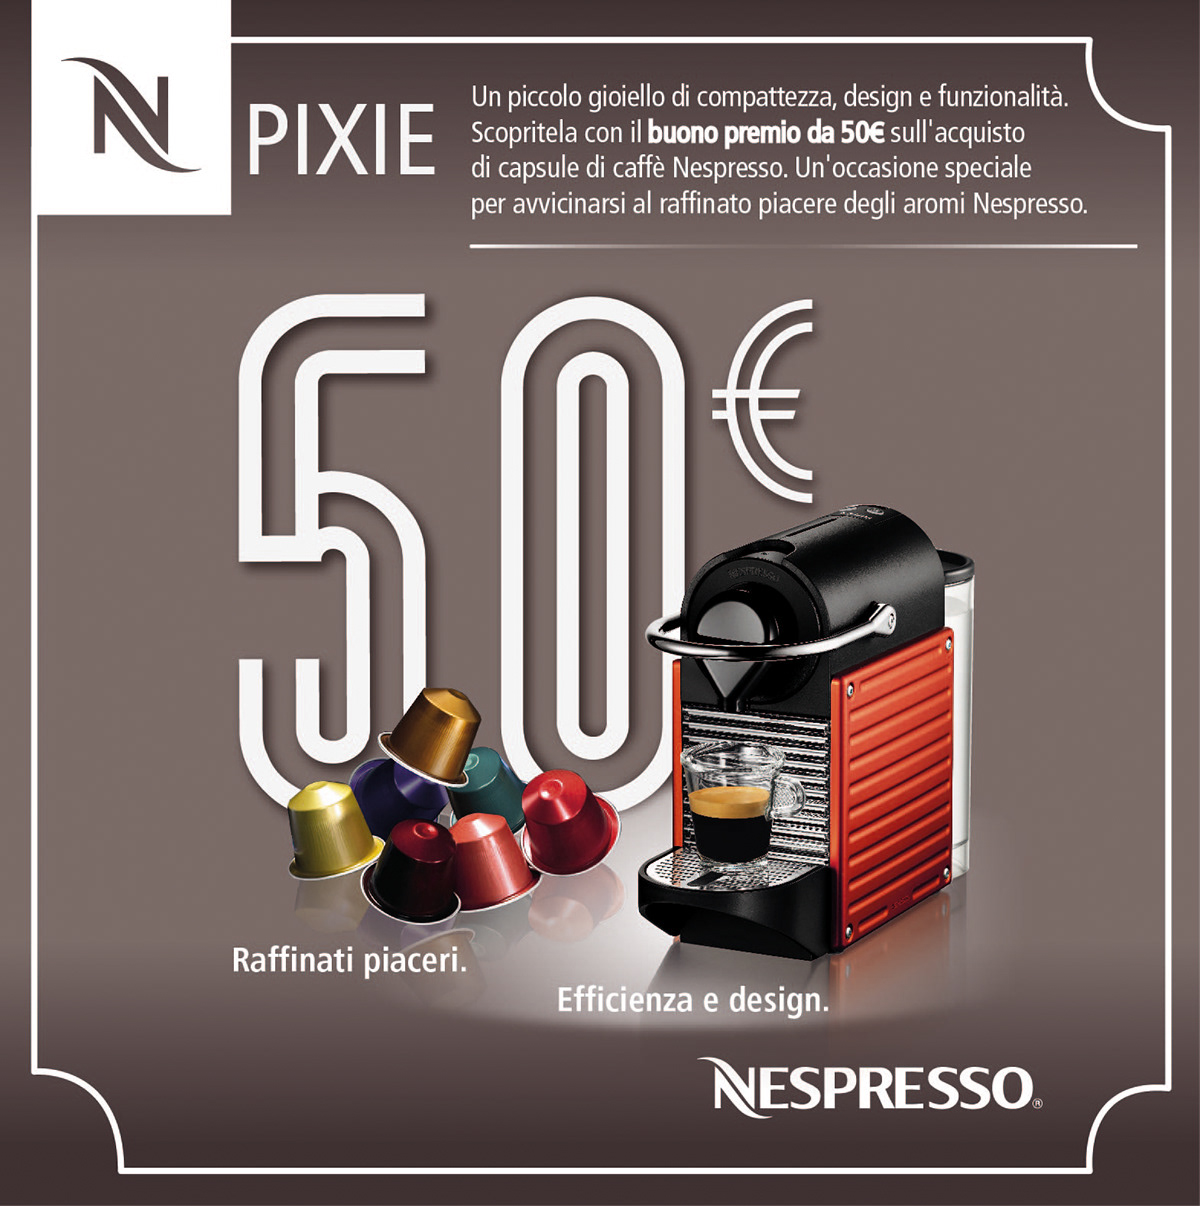 Nespresso Promotion design coffe